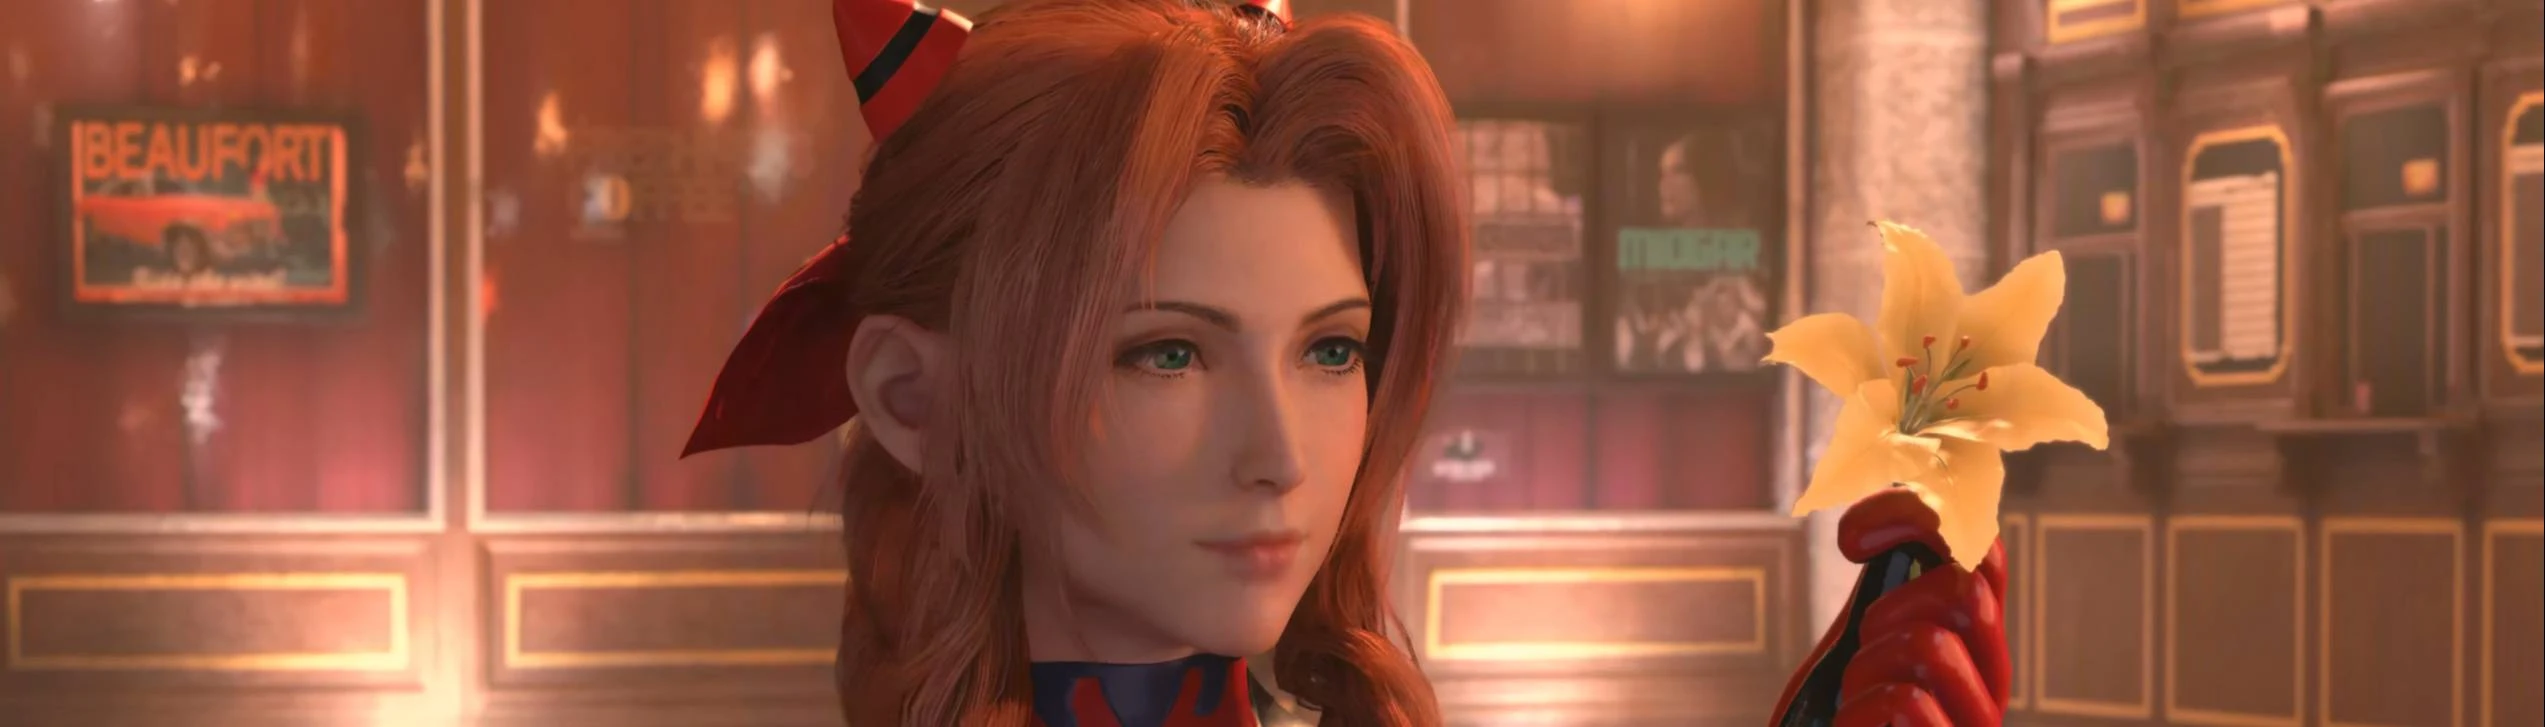 Final Fantasy 7 Remake Gets Demake Mod to Bring Back Low-Poly Graphics - IGN